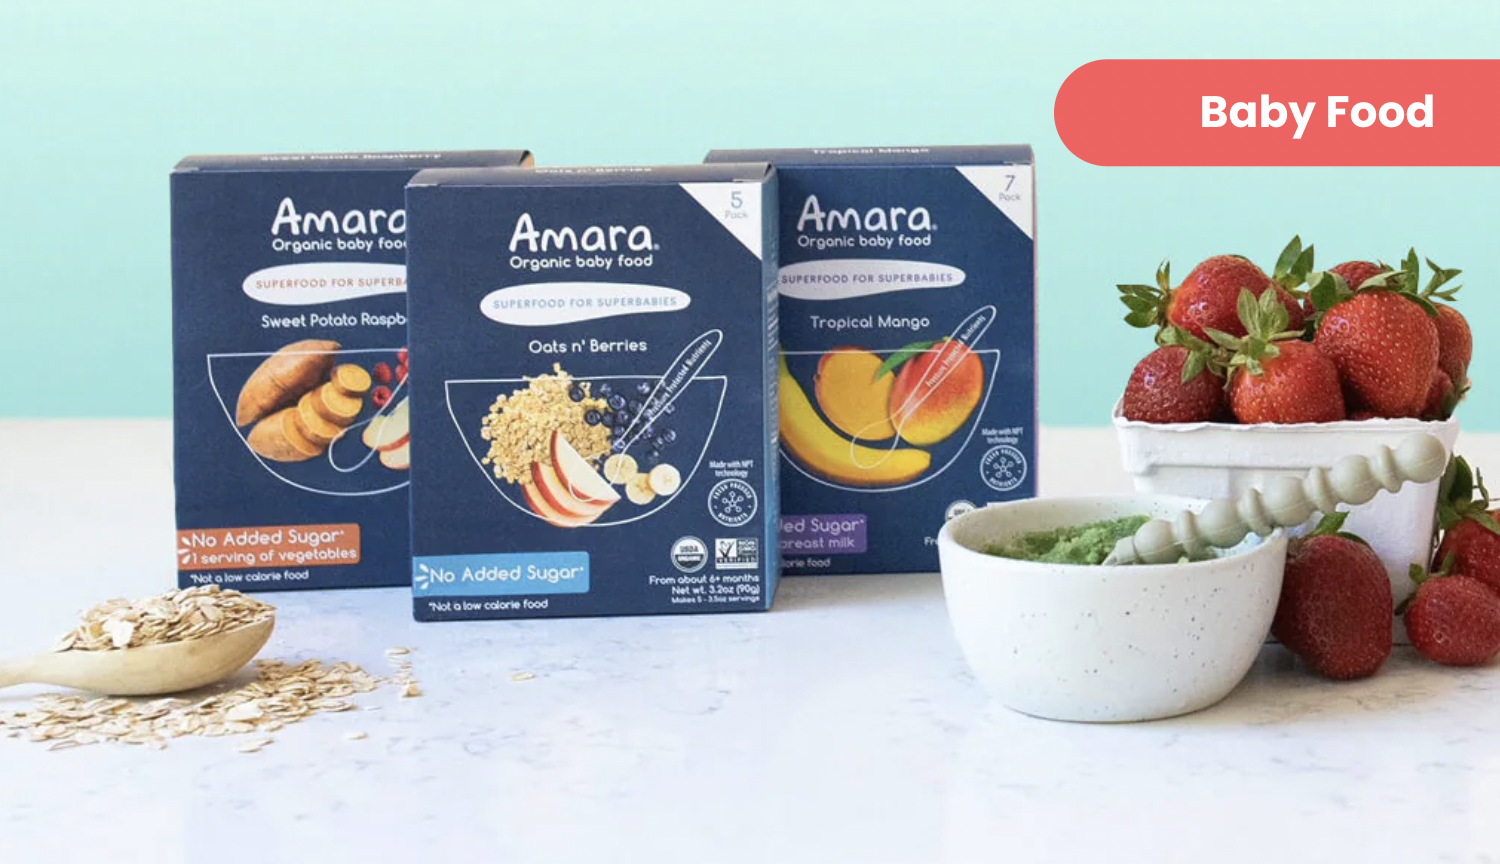 DTC婴儿食品品牌「Amara」宣完成2000万美元B轮融资-艾格农业投融资平台